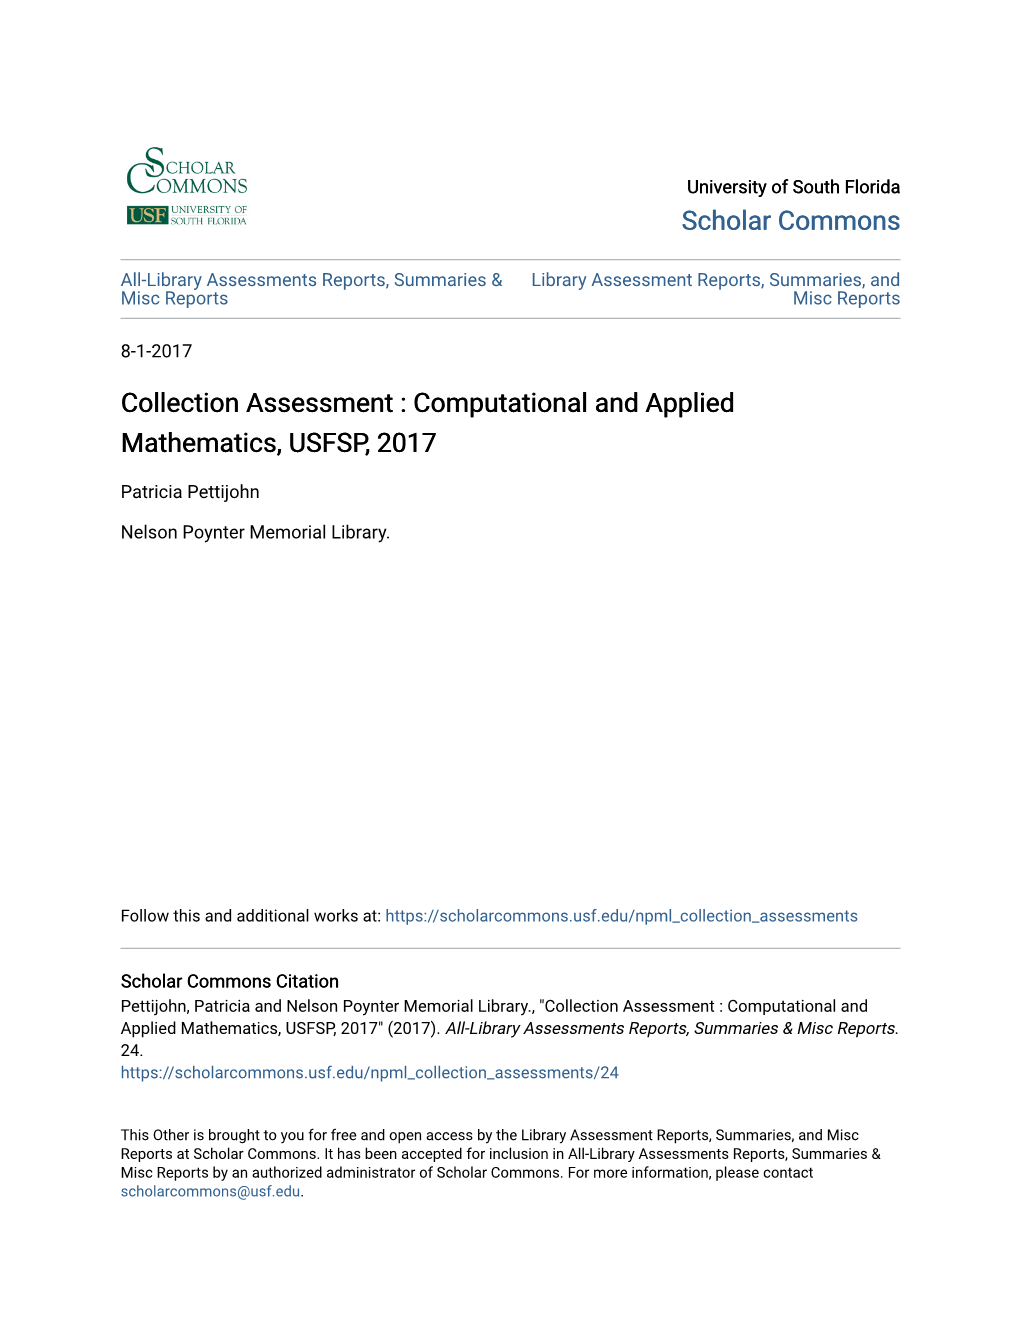 Collection Assessment : Computational and Applied Mathematics, USFSP, 2017